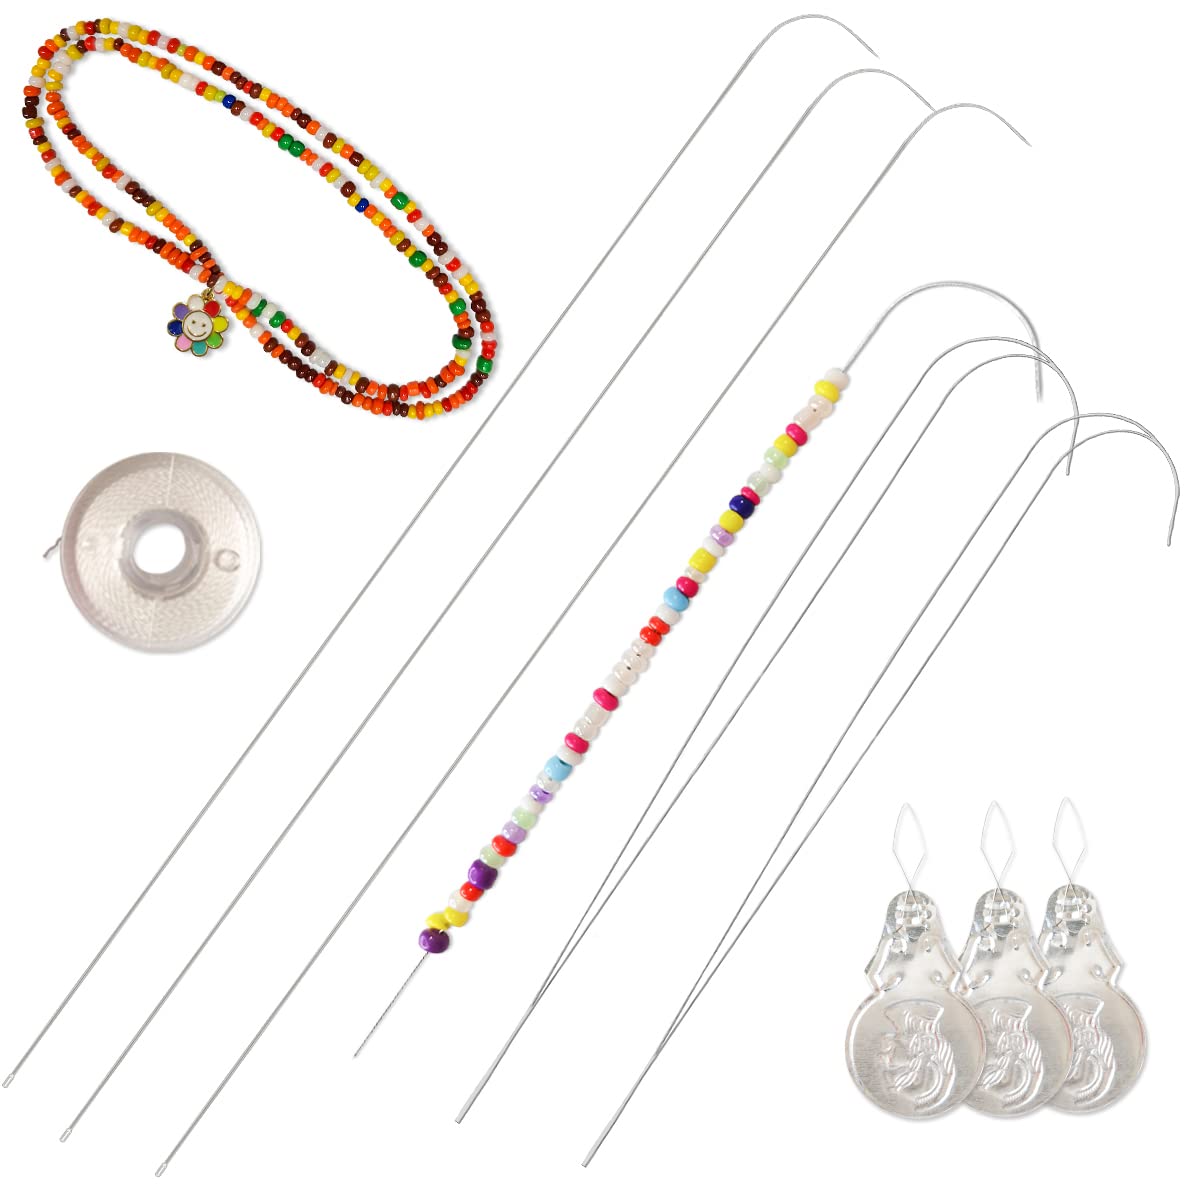  58 PCS Beading Needles Set for Jewelry Making Includes 8 Pcs  Big Eye Beading, 40 Pcs Hand-Sewing Beading Needles, Yarn Scissors,  Threader, Tweezers, Thimble for Bracelets and Jewelry Making (Blue） 